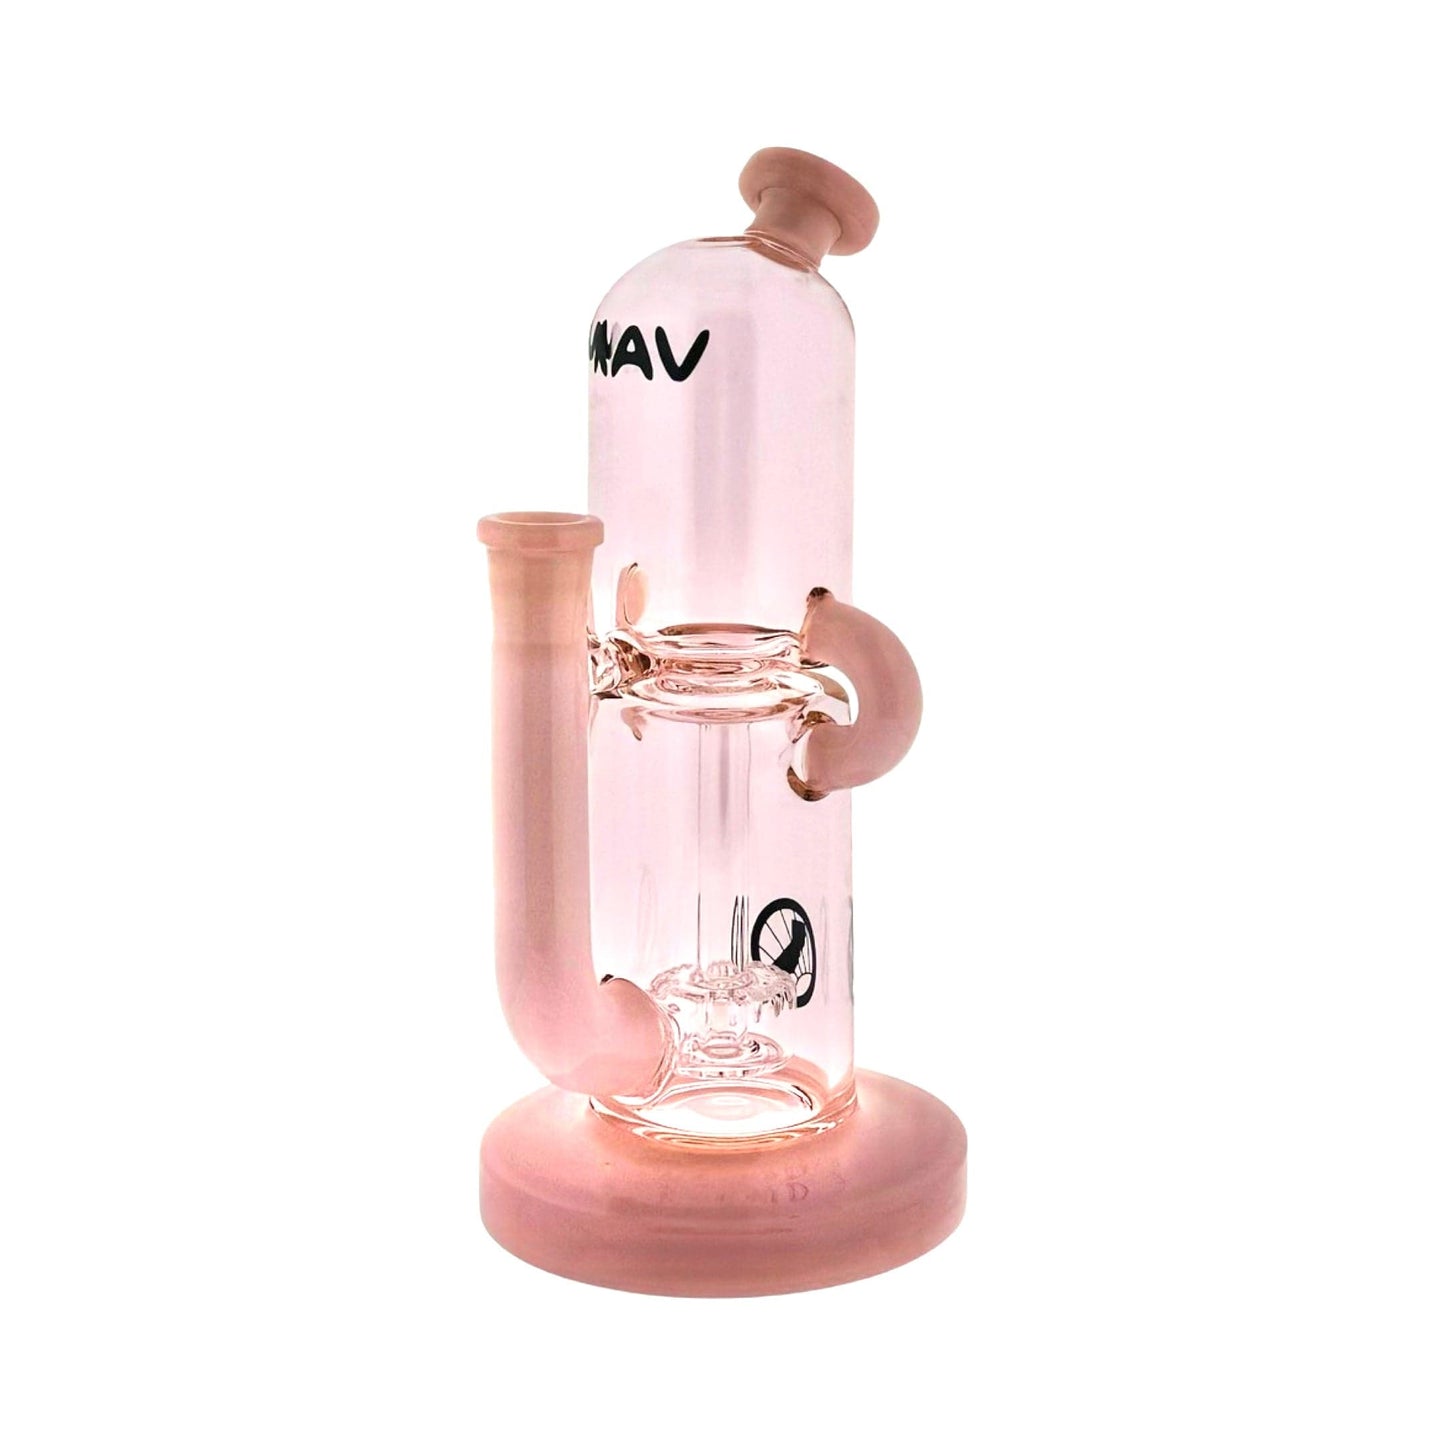 MAV Glass Dab Rig pink and pink 2-Tone Double Uptake Pillbox Rig